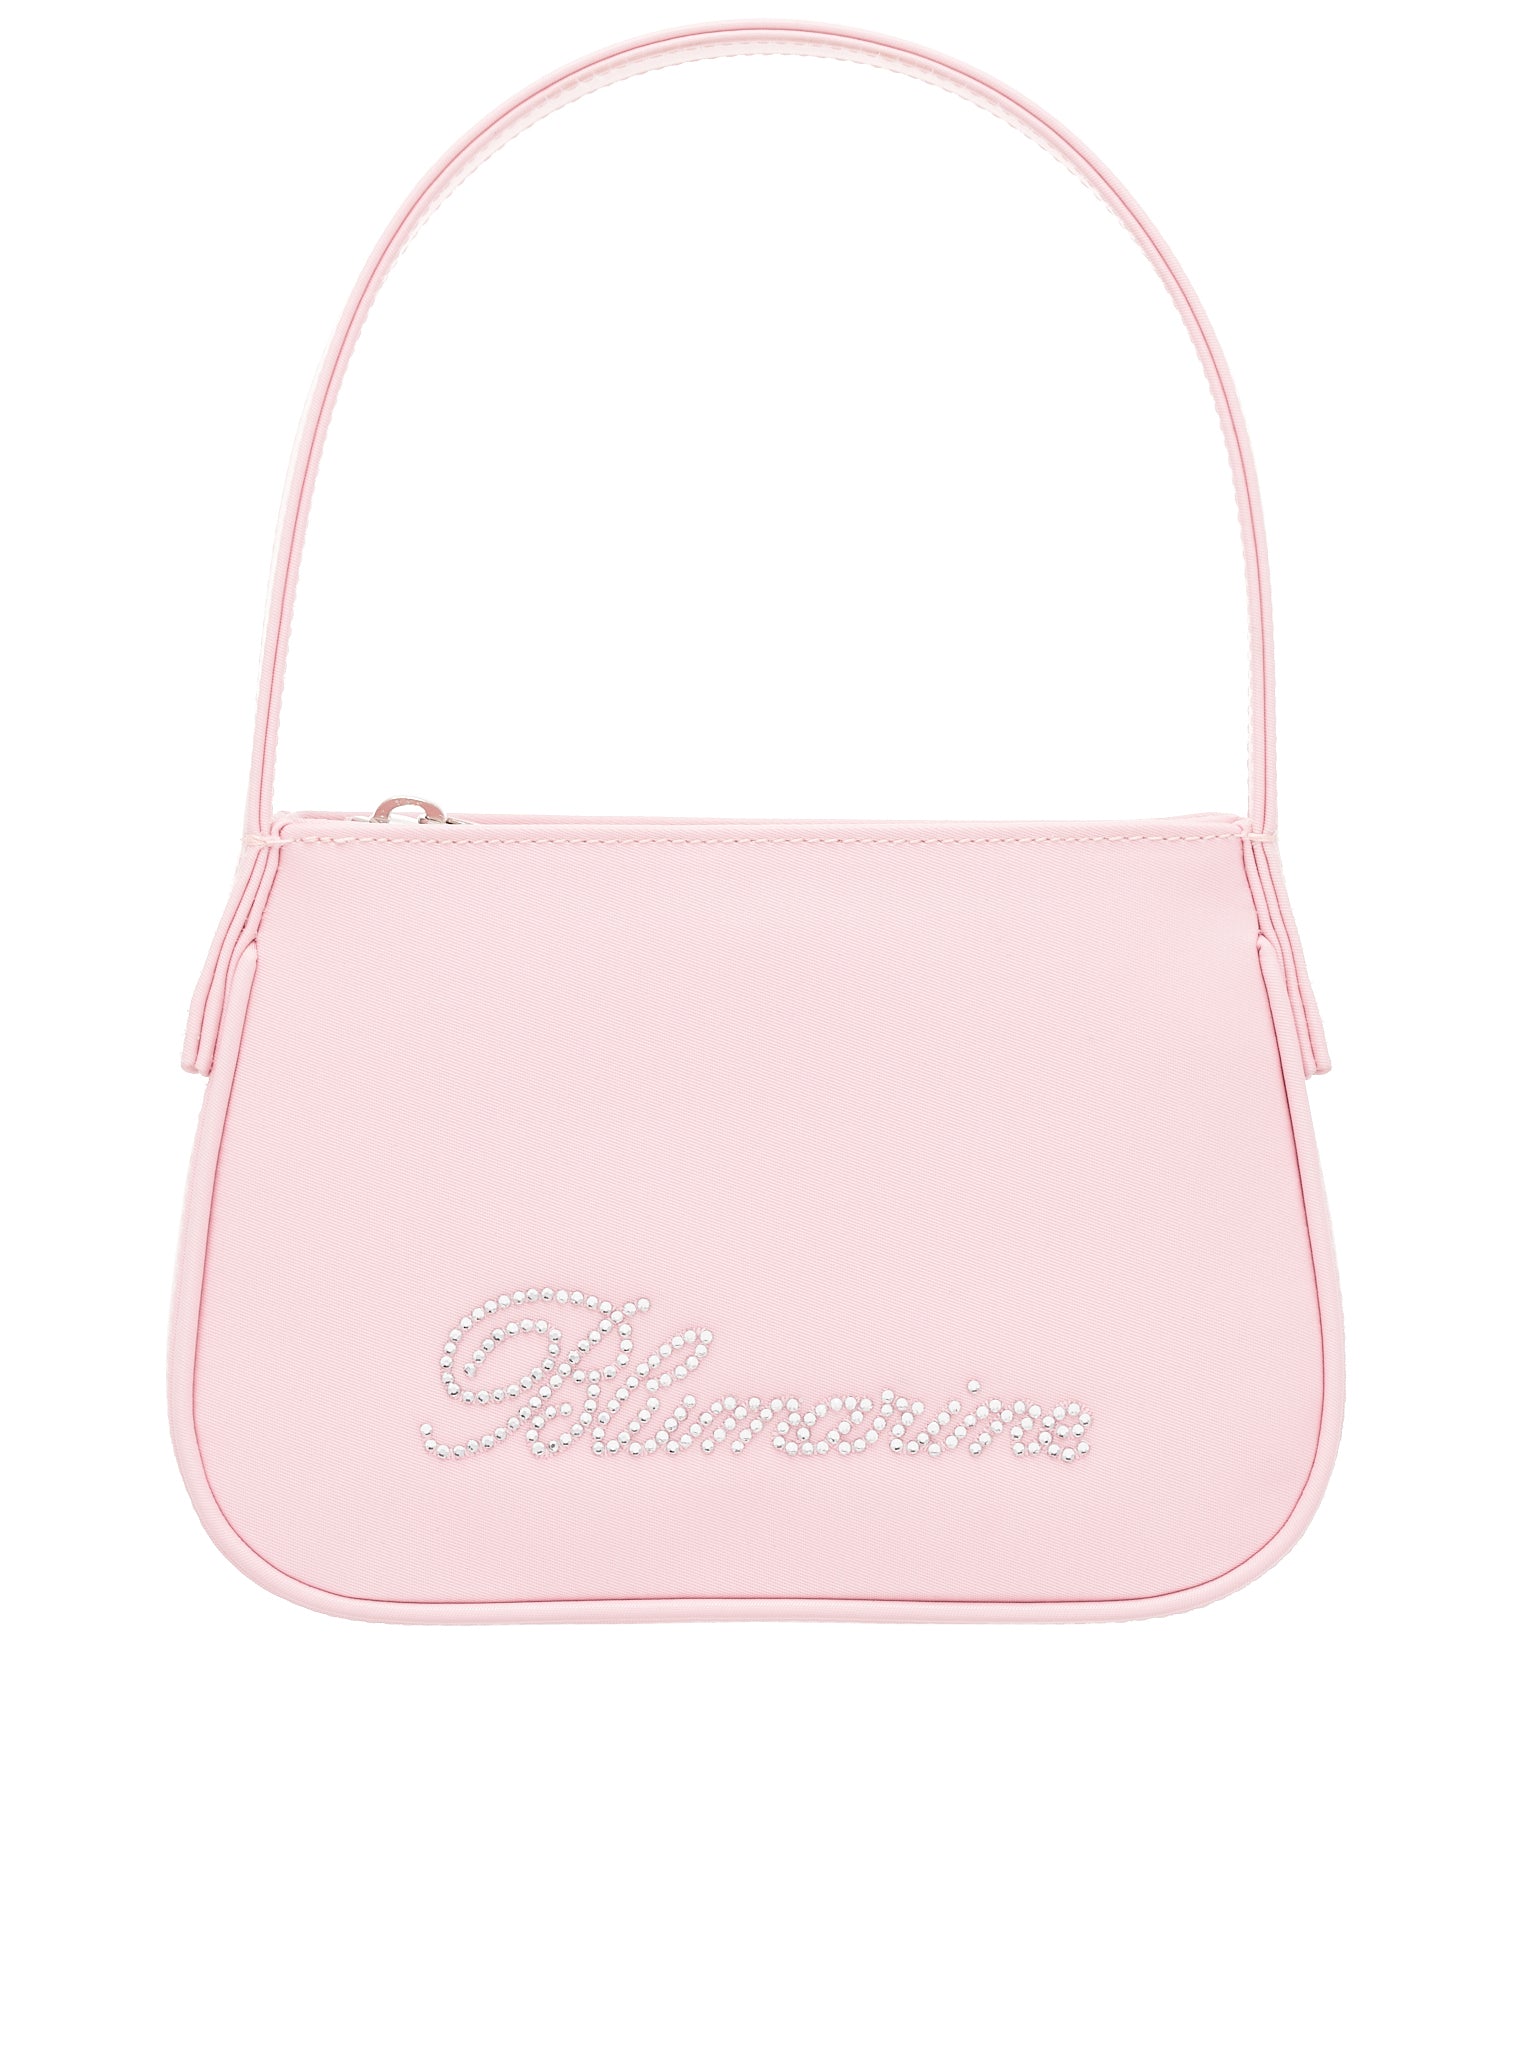 Blumarine Handbag | H.Lorenzo - front